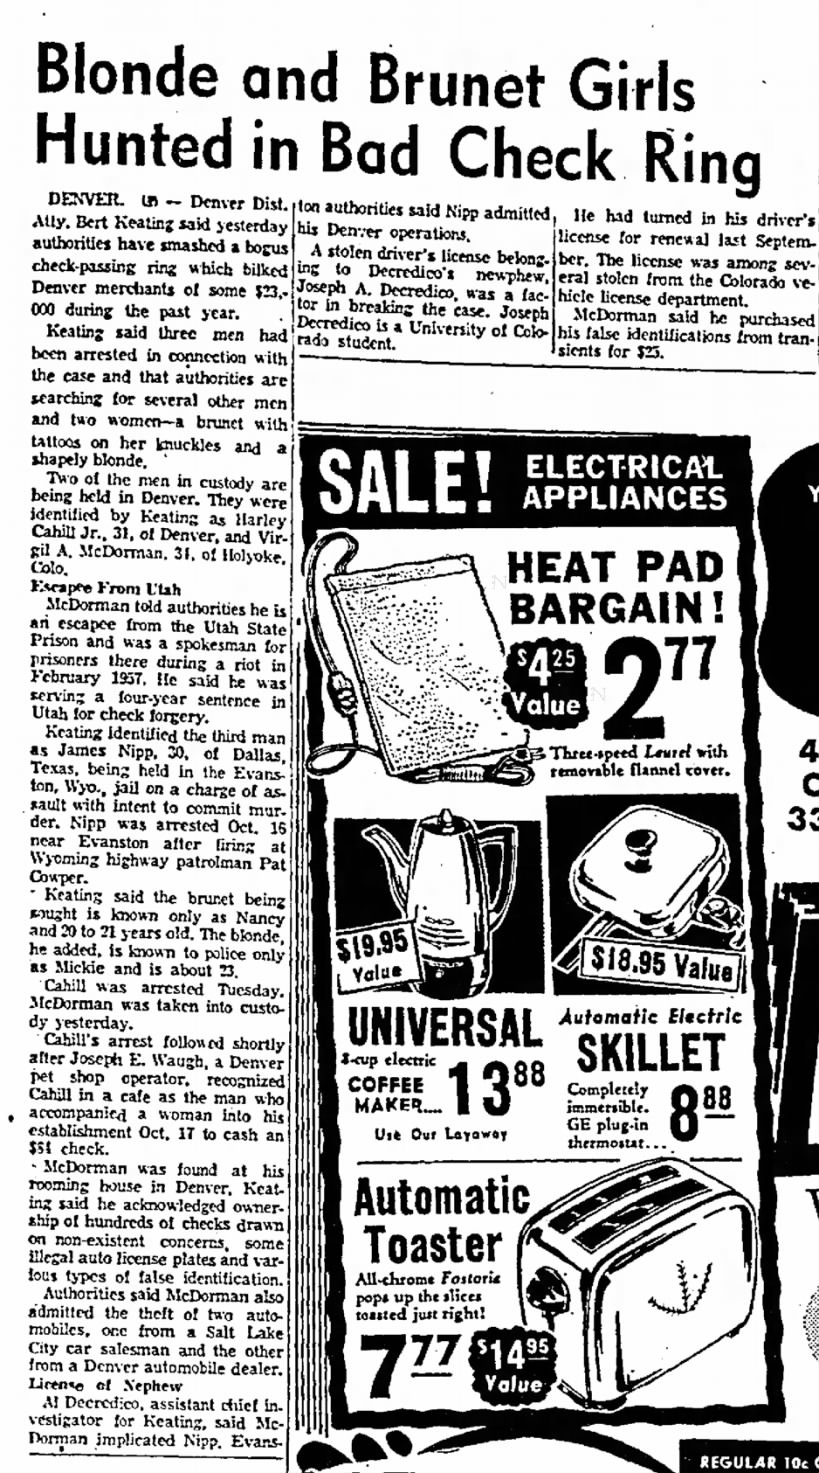 The Corpus Christi Caller-Times, 13 November 1958, Page 17 - Virgil McDorman